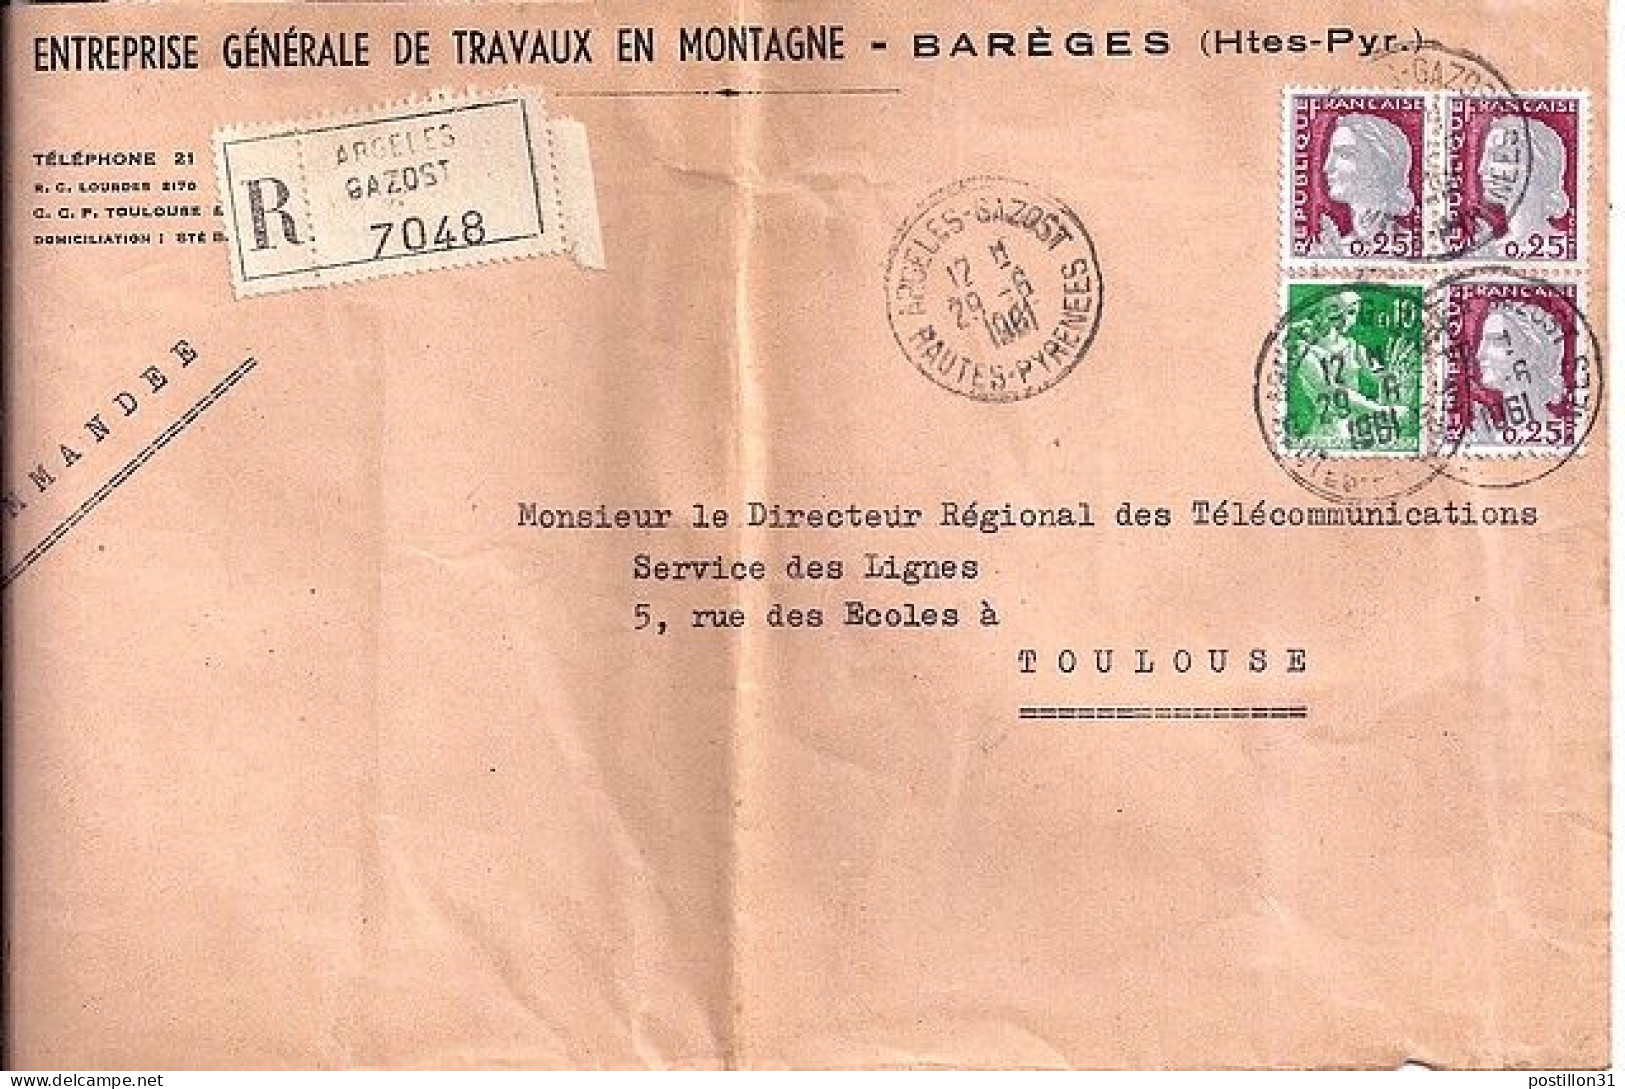 DECARIS N° 1263x3/1231 S/L.REC. DE ARGELES GAZOST / 29.6.61 - 1960 Marianne (Decaris)